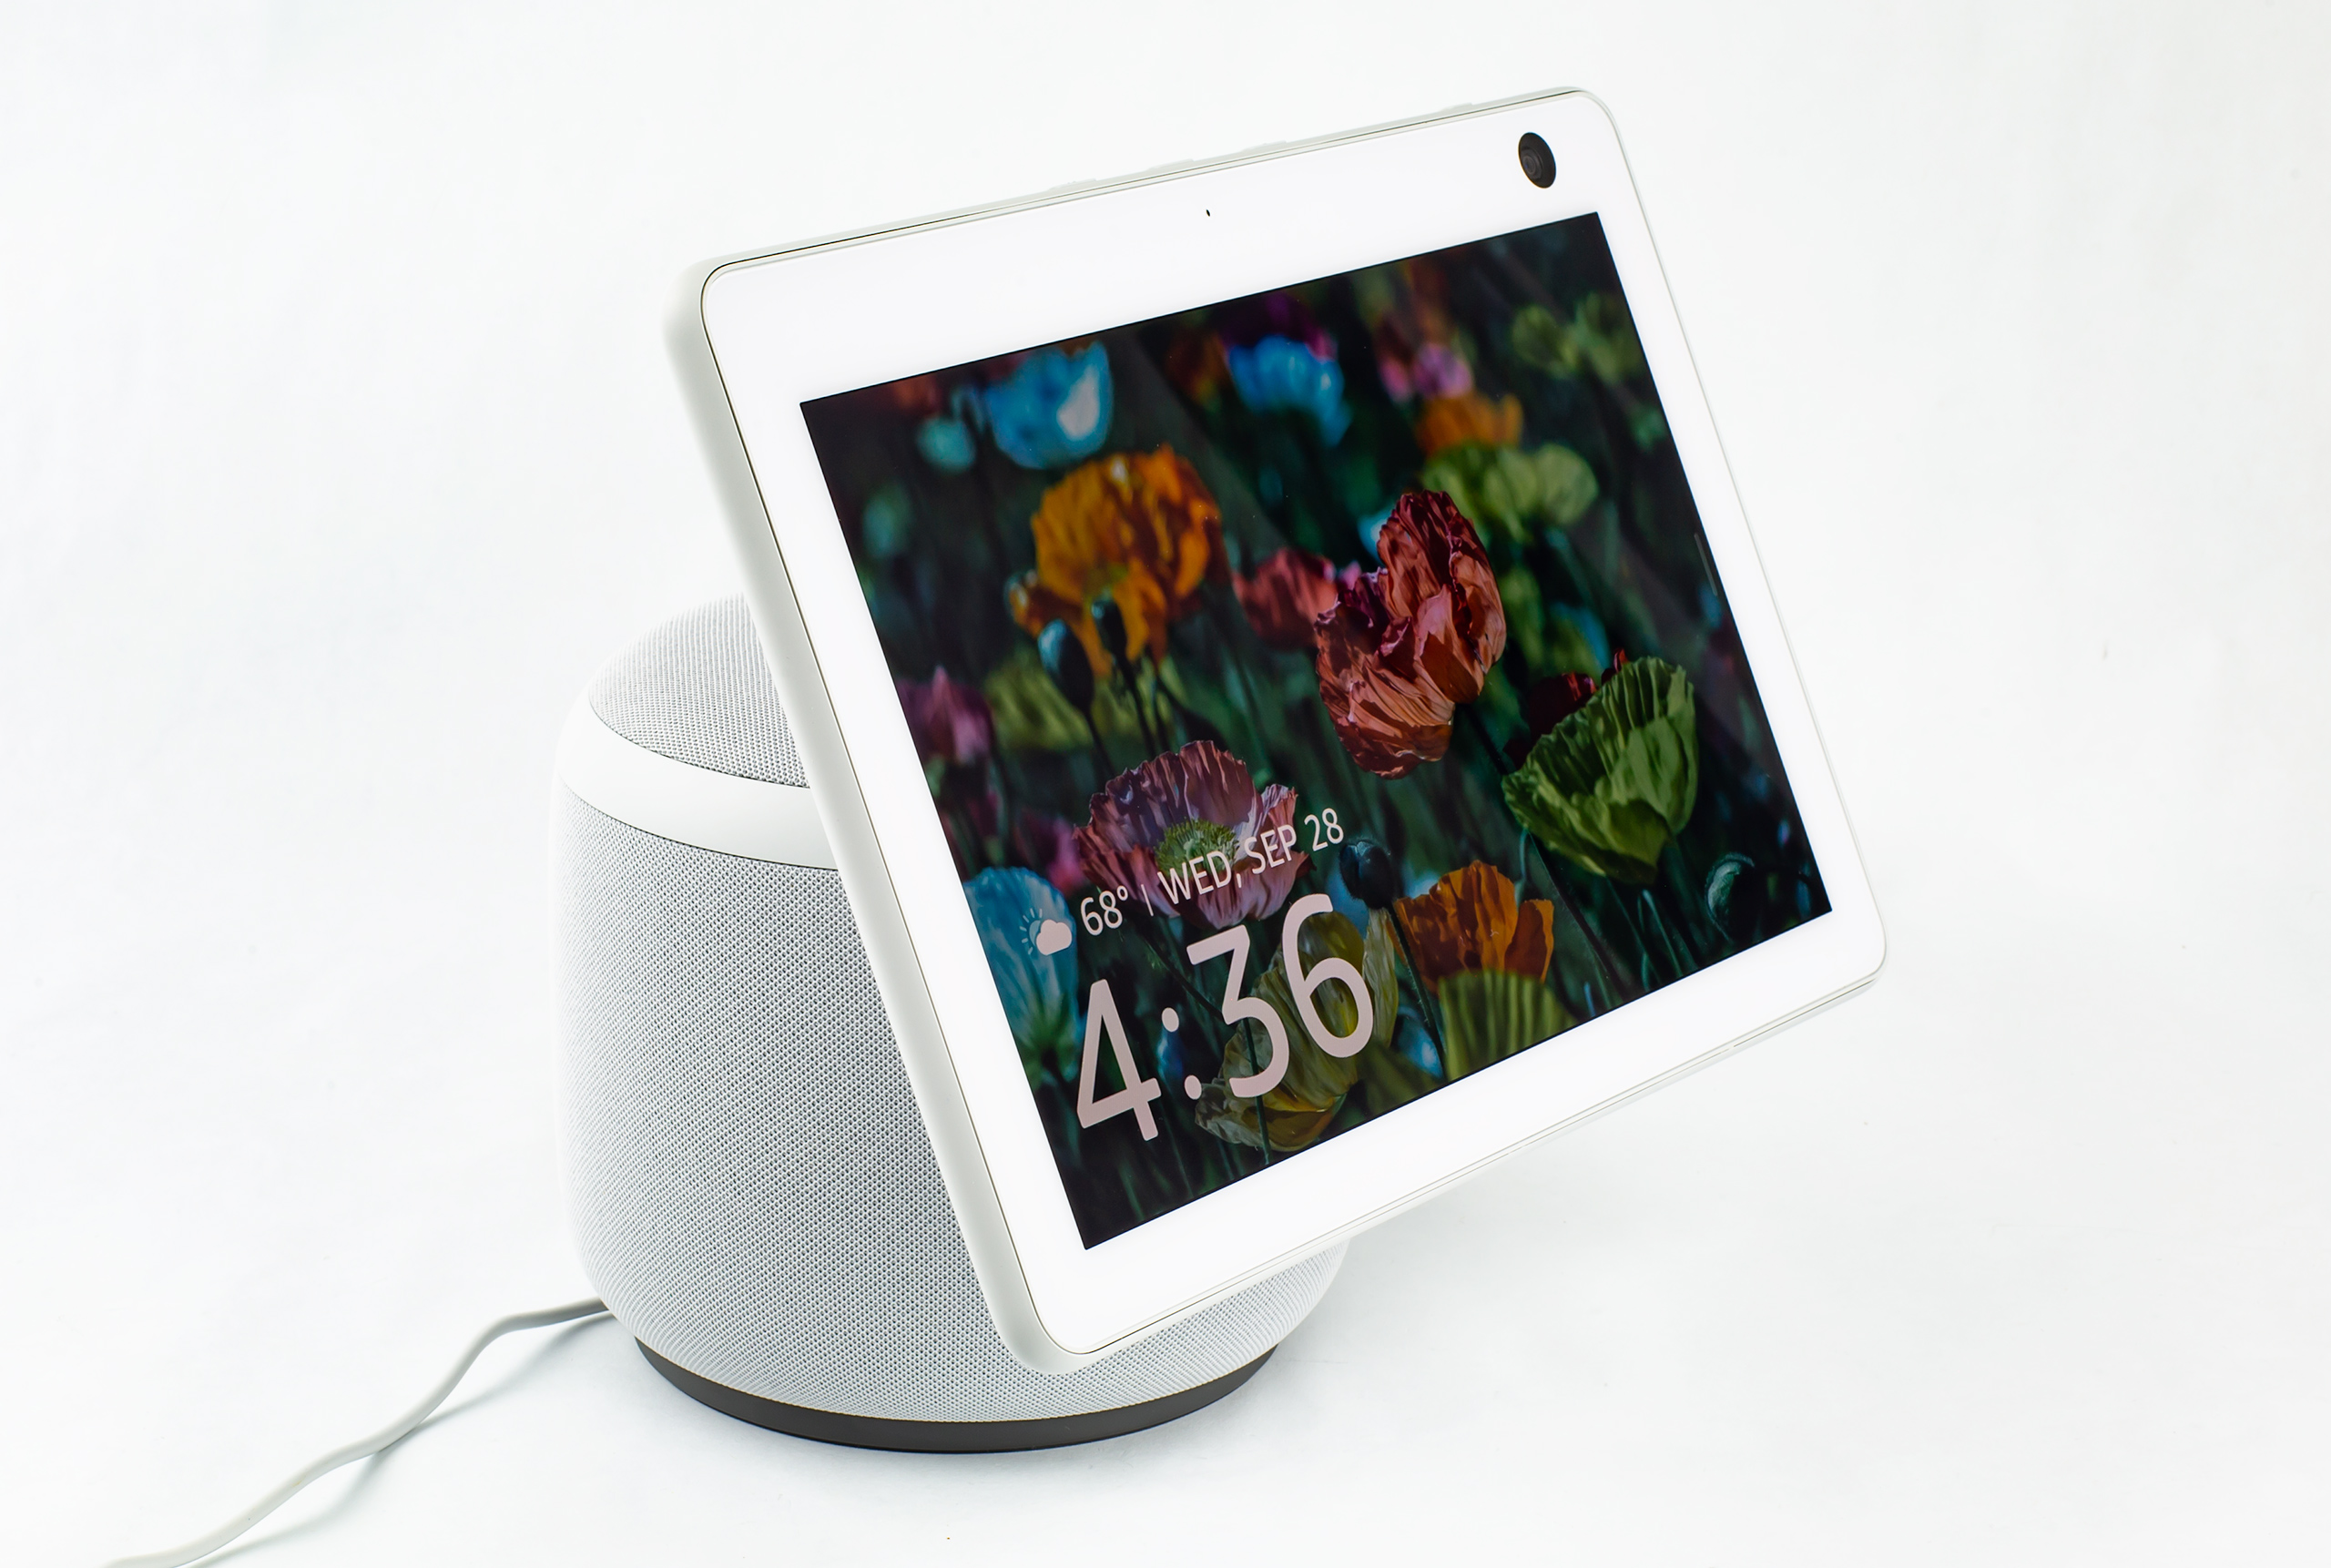 s Echo Hub is a wall-mountable smart home control panel